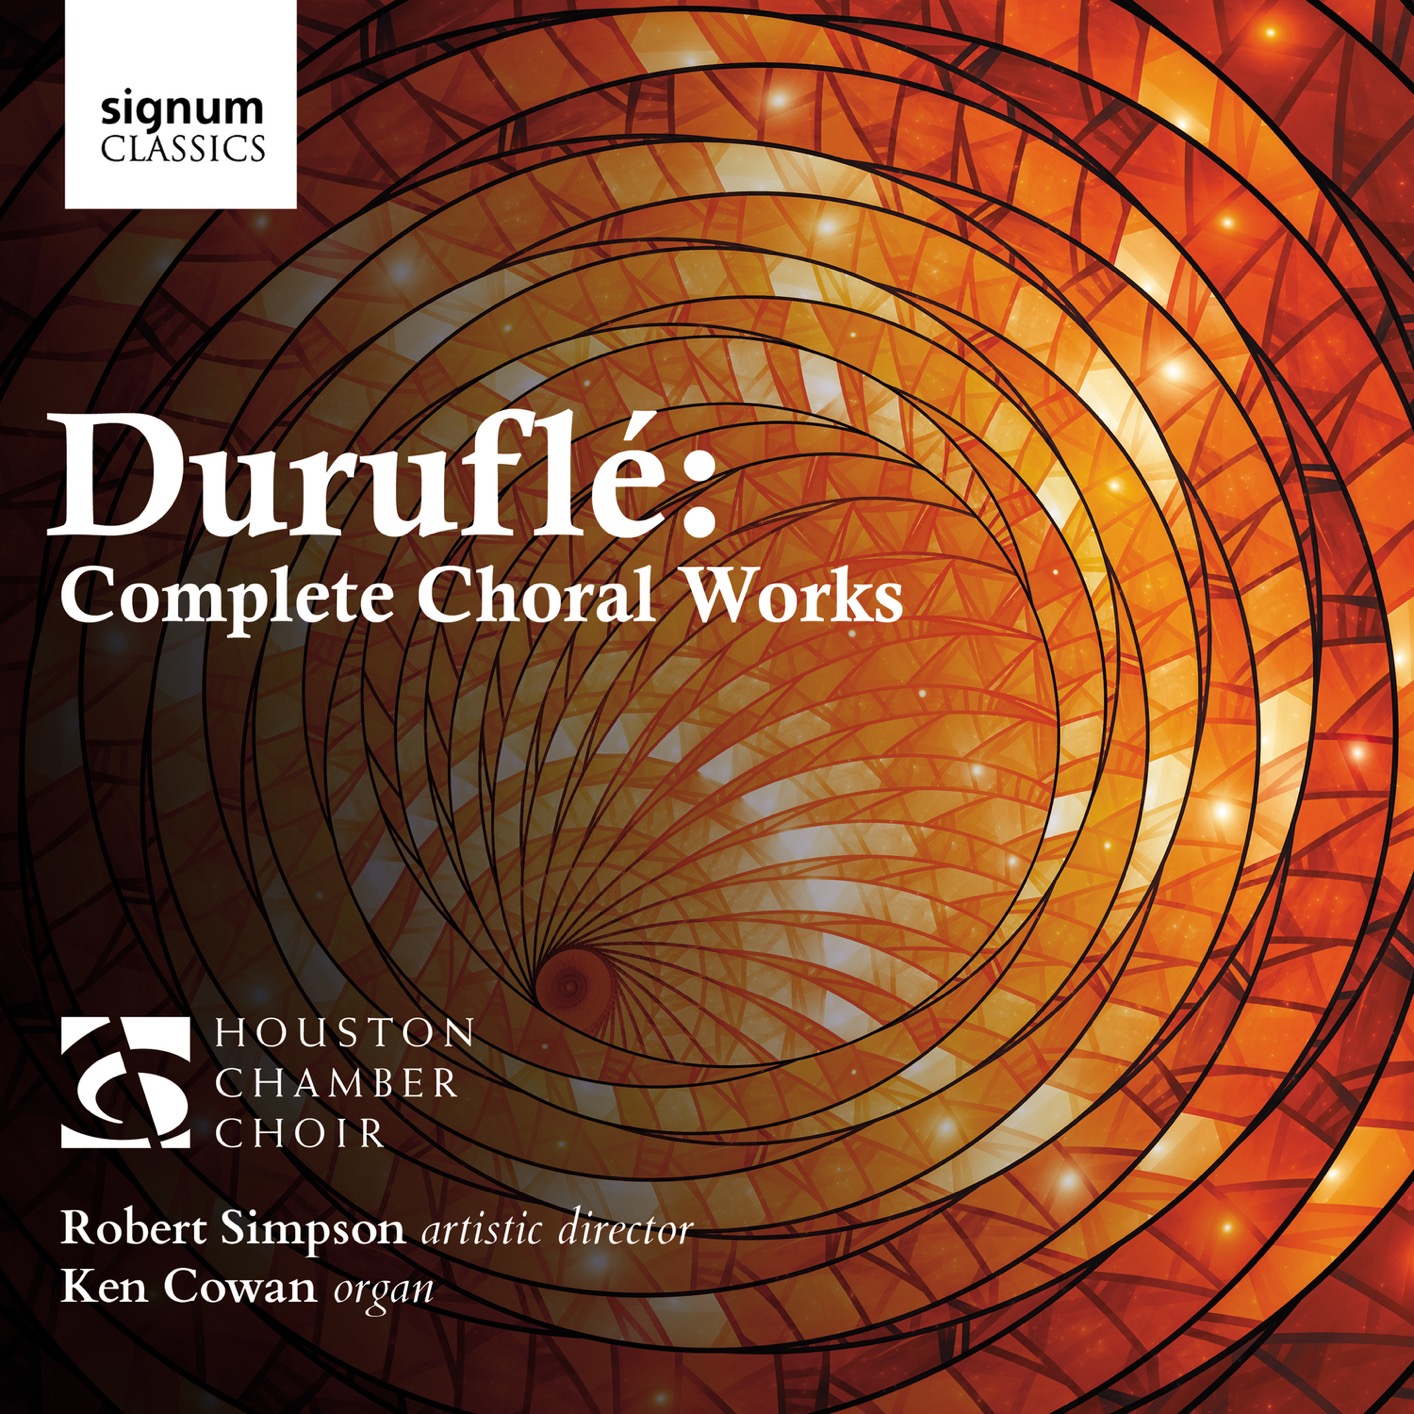 Houston Chamber Choir, Ken Cowan & Robert Simpson - Durufle: Complete Choral Works (2019) [FLAC 24bit/96kHz]